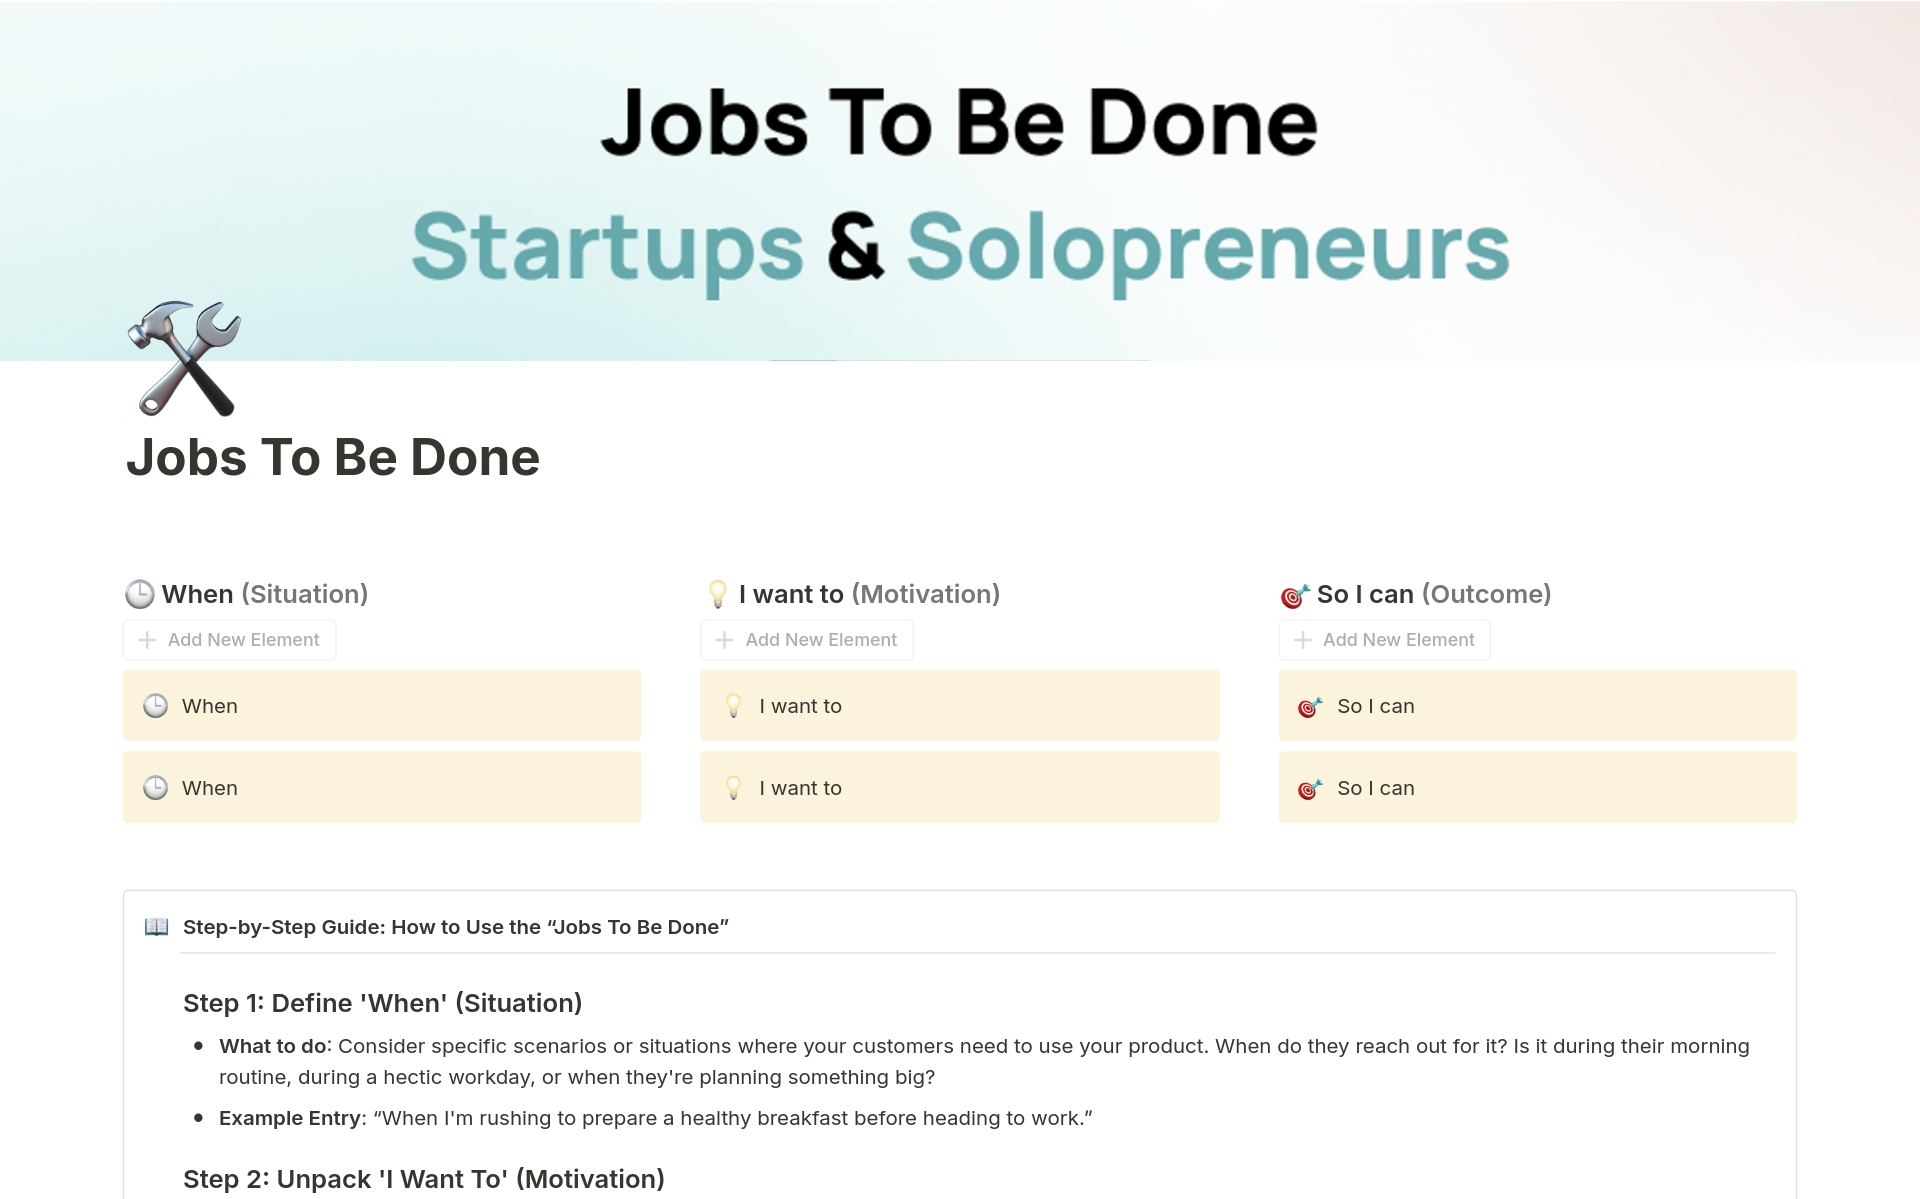 Aperçu du modèle de Jobs To Be Done for Startups & Solopreneurs